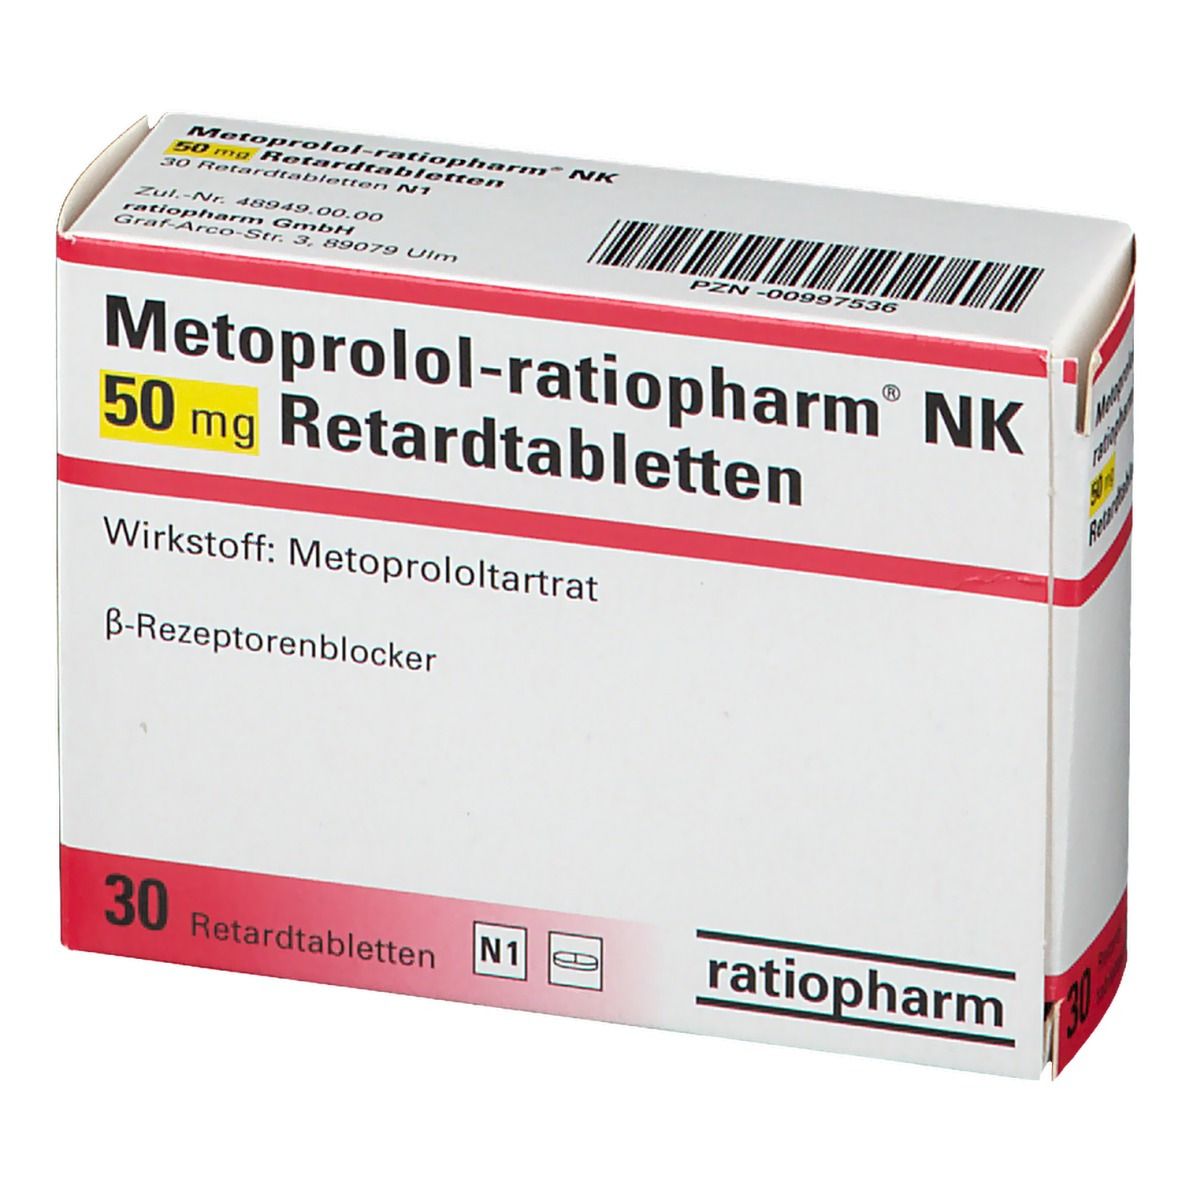 Metoprolol-ratiopharm® NK 50 mg